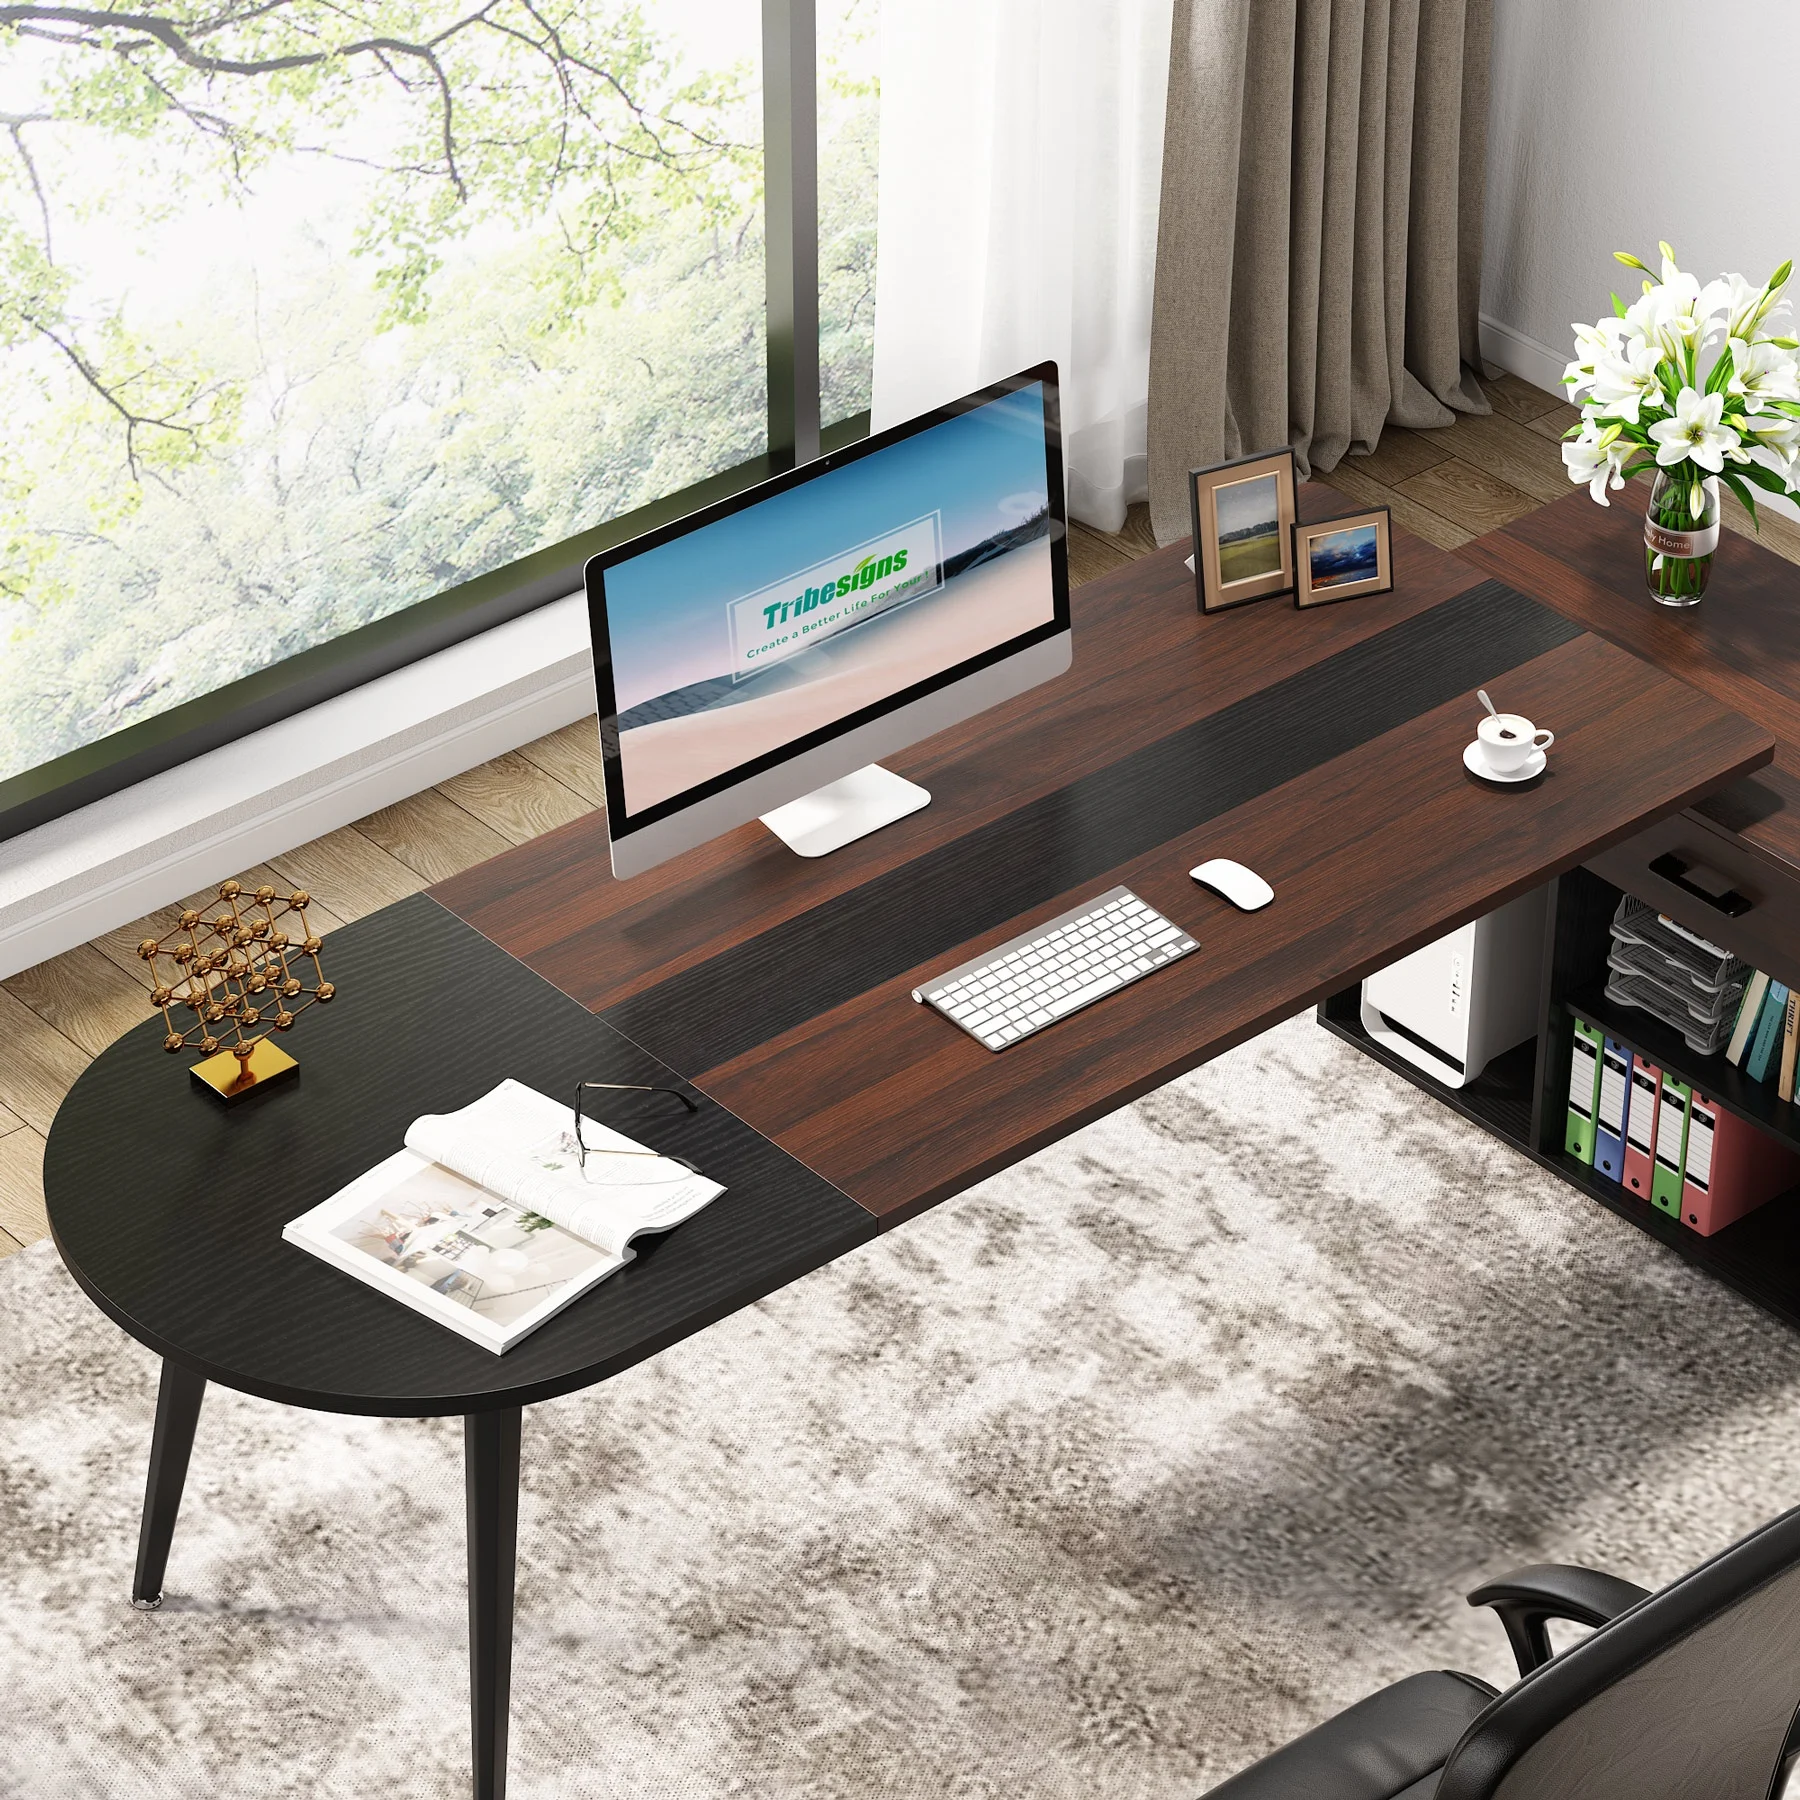 Tribesigns 70.9 inch Executive Desk with 47 File Cabinet Modern Home Office Desk Workstation Business Furniture Set Dark Walnut